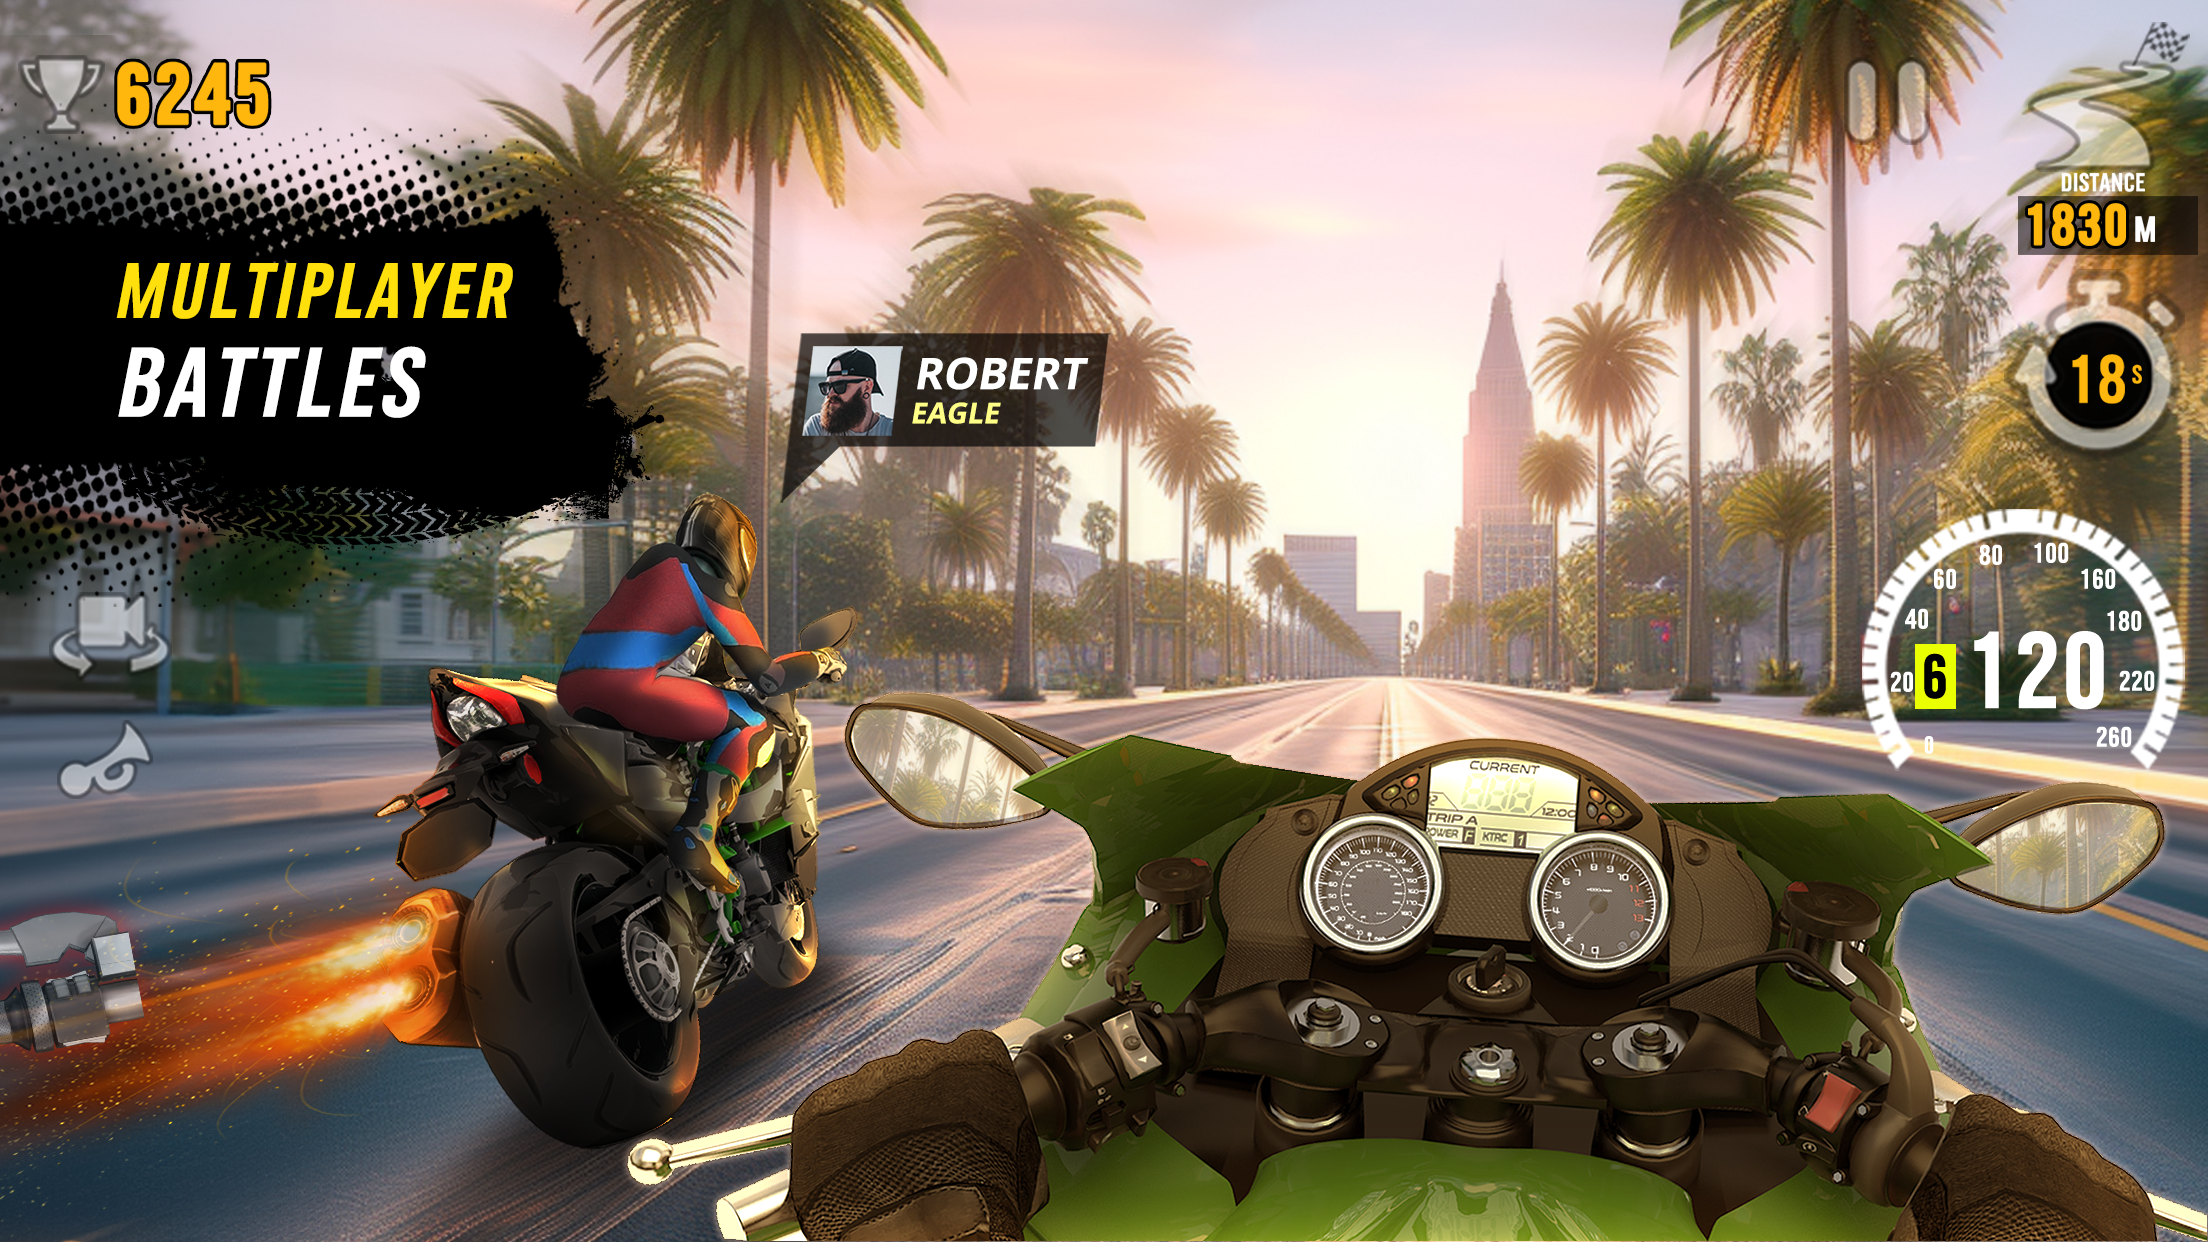 Screenshot 1 of Motor Tour : Motorcy Simulator 2.0.8